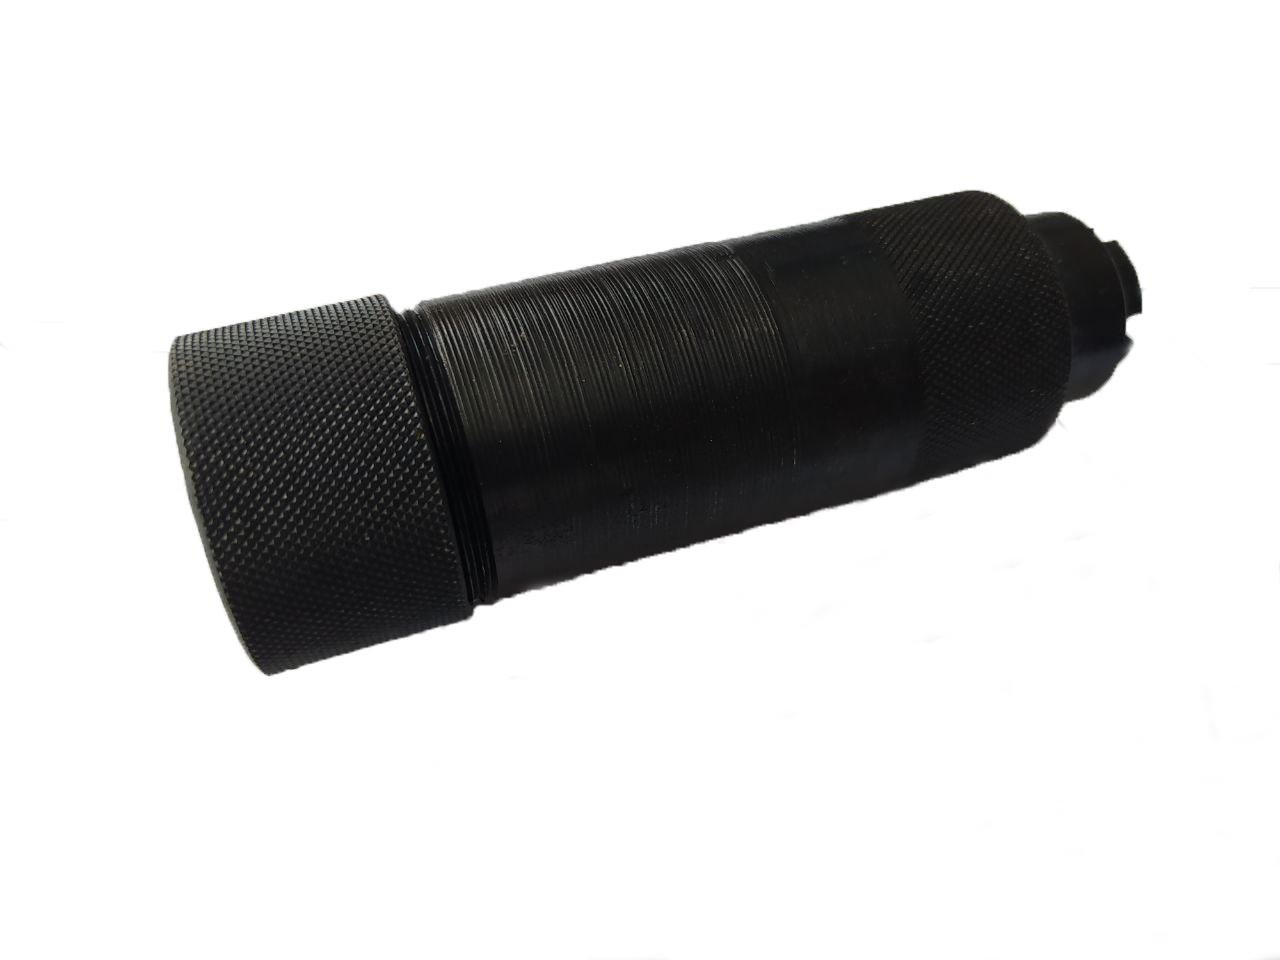 Полум'ягасник для АК калібр 7,62 діаметр 36 мм - фото 1